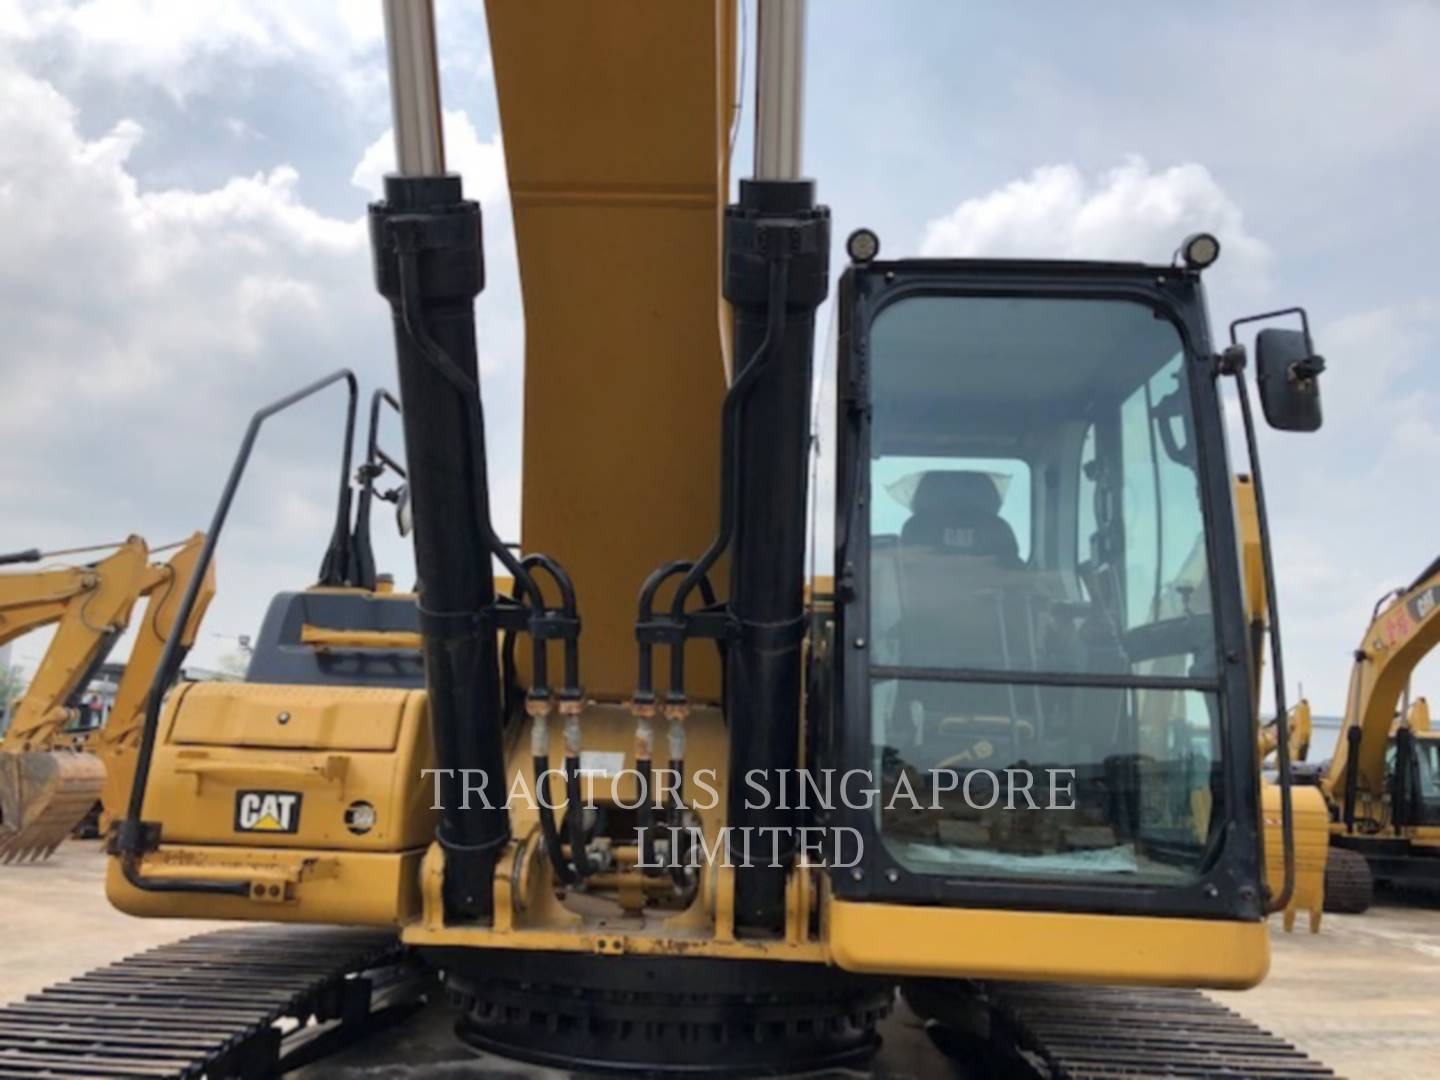 wtk?JHNyYz1hMTBhODA2ZGFlYzg1ZDBhOTYyMDk5NWIzMzgyZTRmOSYkdHh0PVRSQUNUT1JTJTIwU0lOR0FQT1JFJTIwTElNSVRFRCY1MzQw 345-07GC | Tractors Singapore